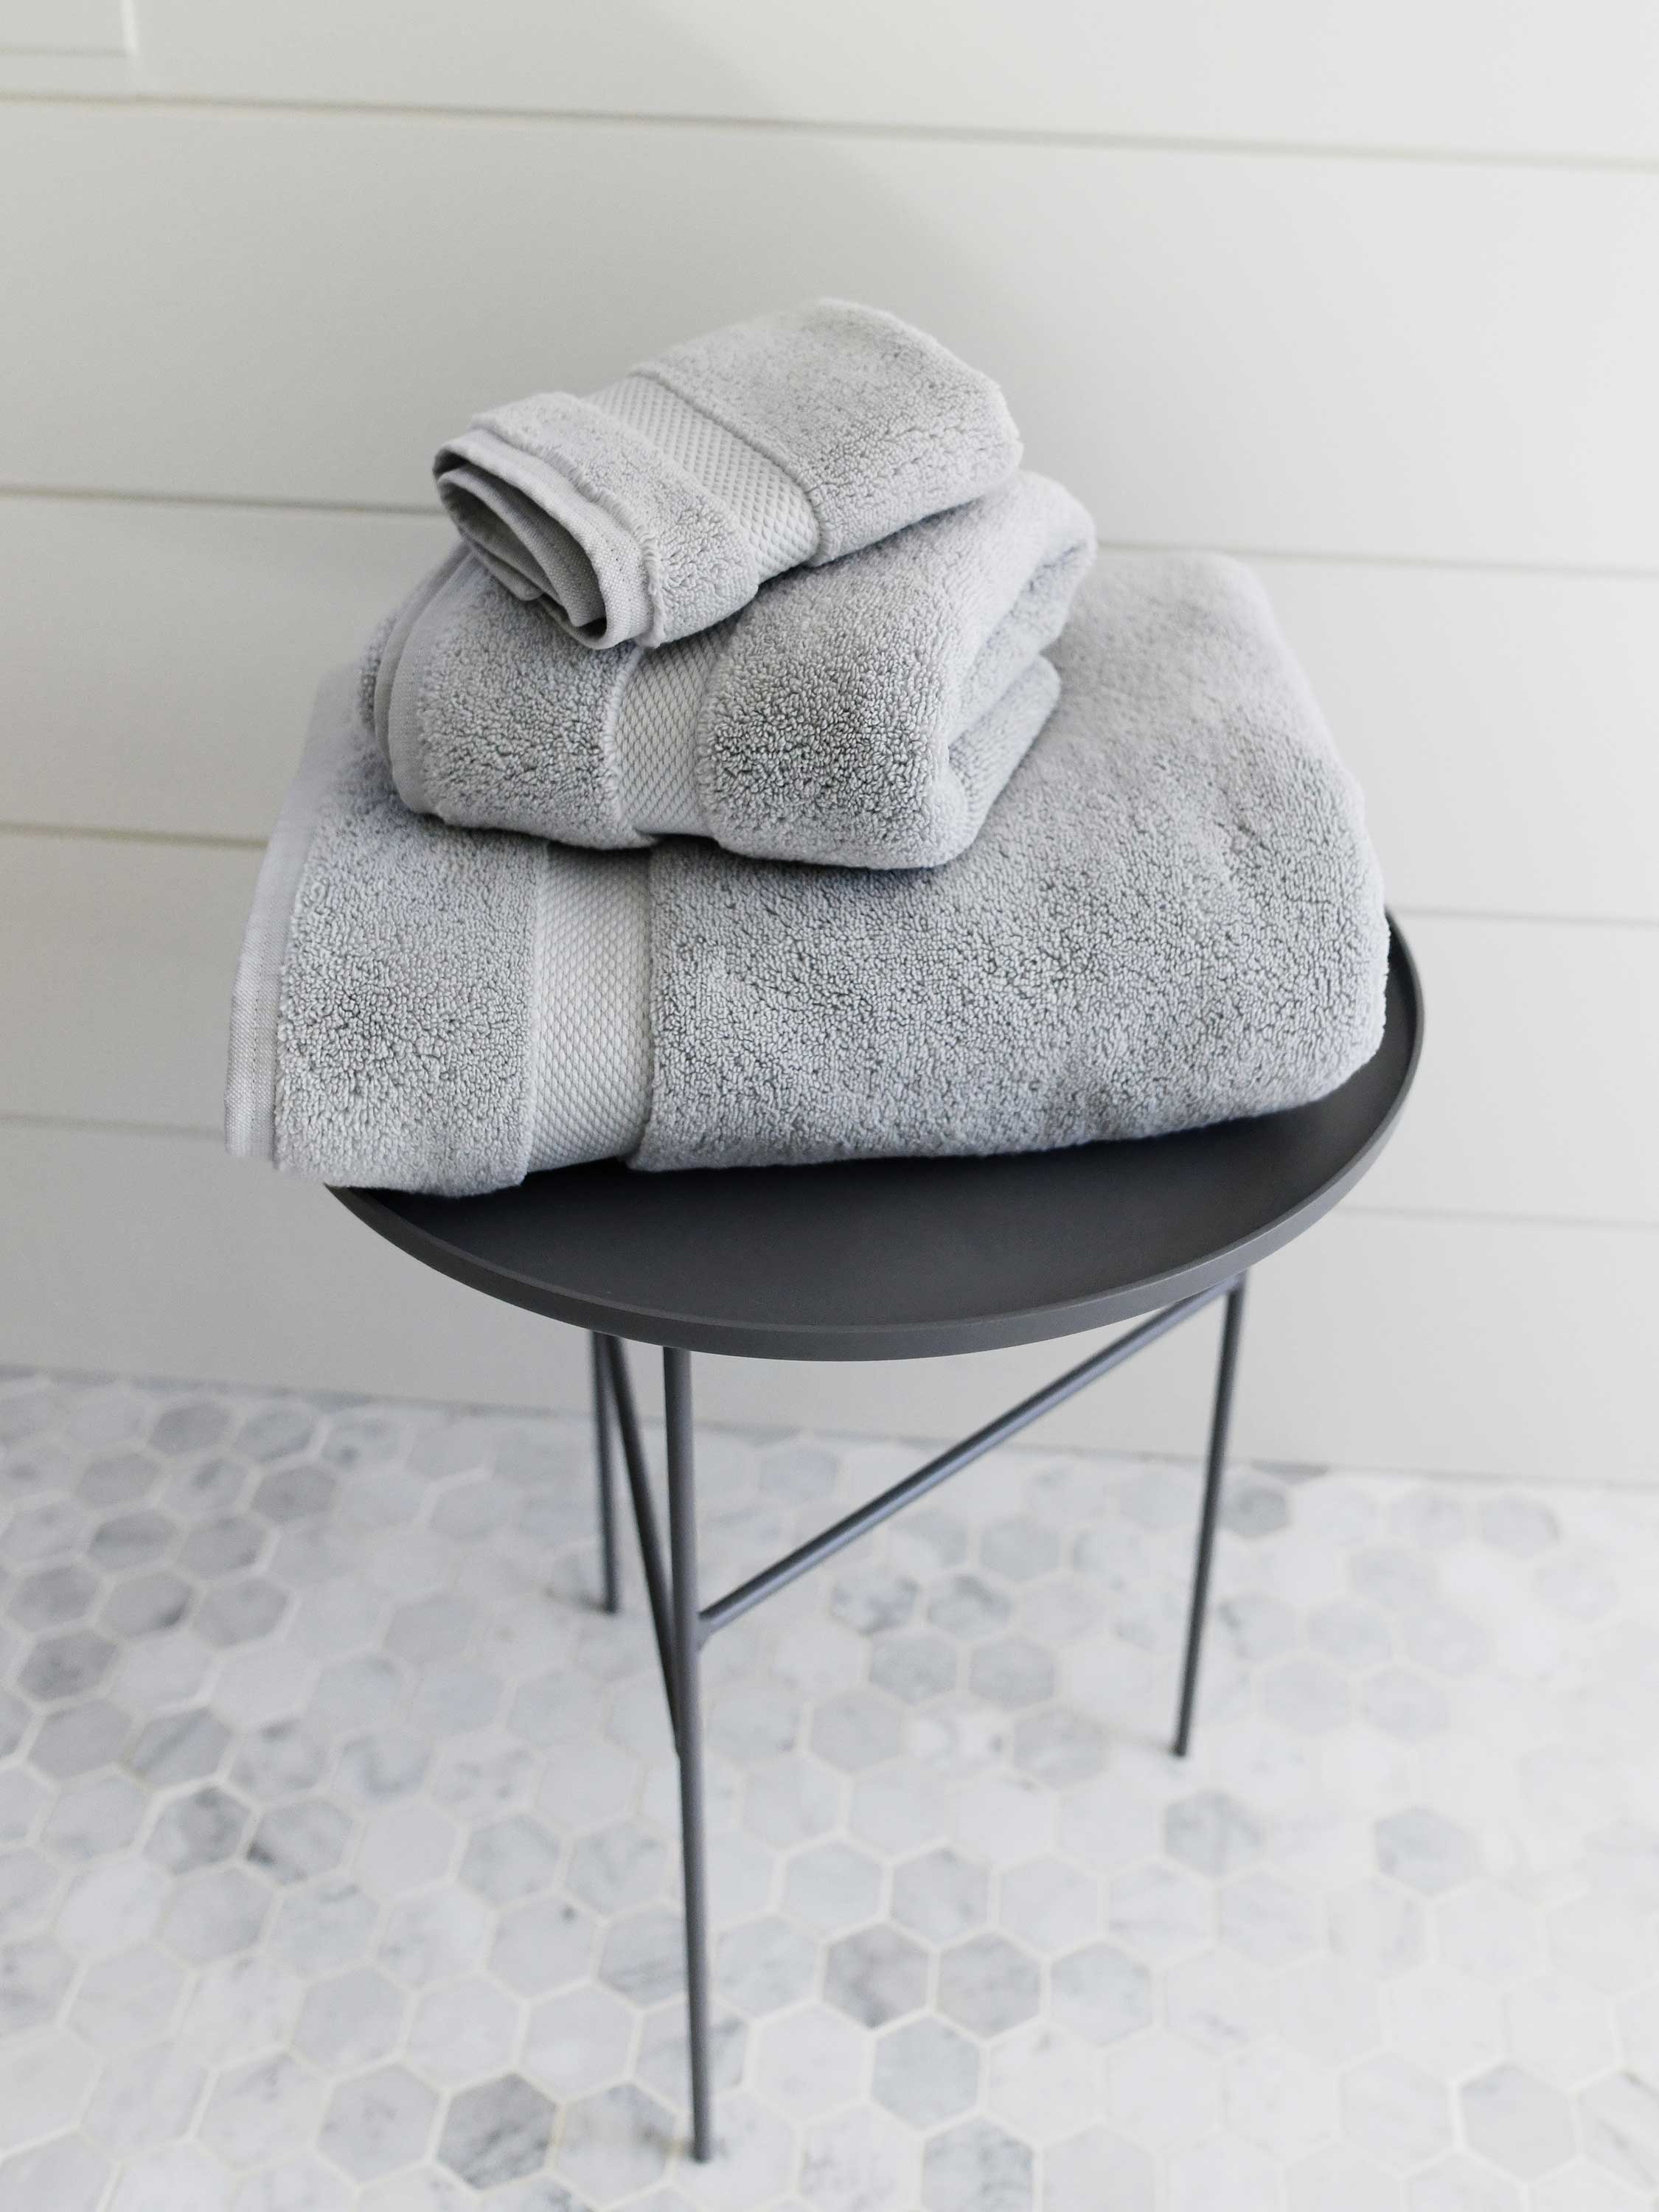 Supima Cotton Bath Towel Set by Laguna Beach Textile Co - 2 Bath Towels -  Hotel Quality Plush 730 GSM - Large 57 x 30 White